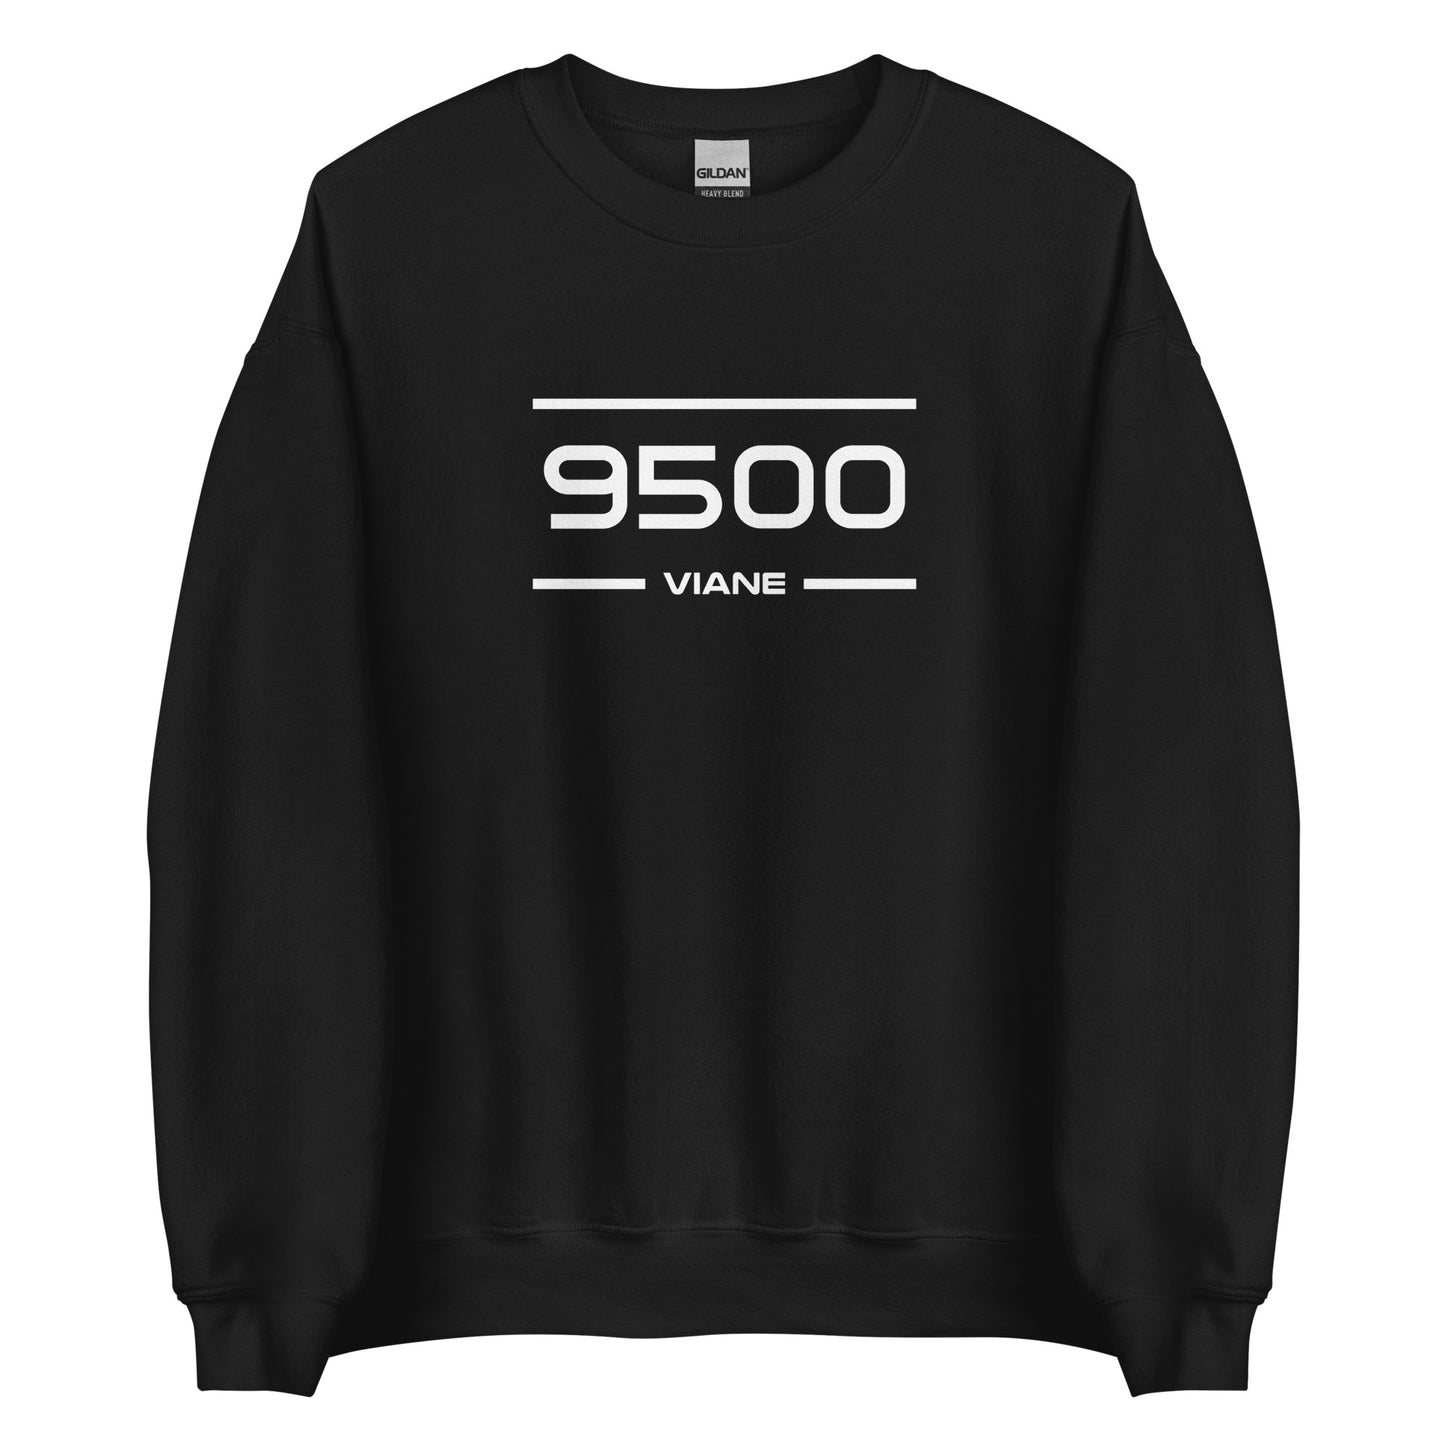 Sweater - 9500 - Viane (M/V)